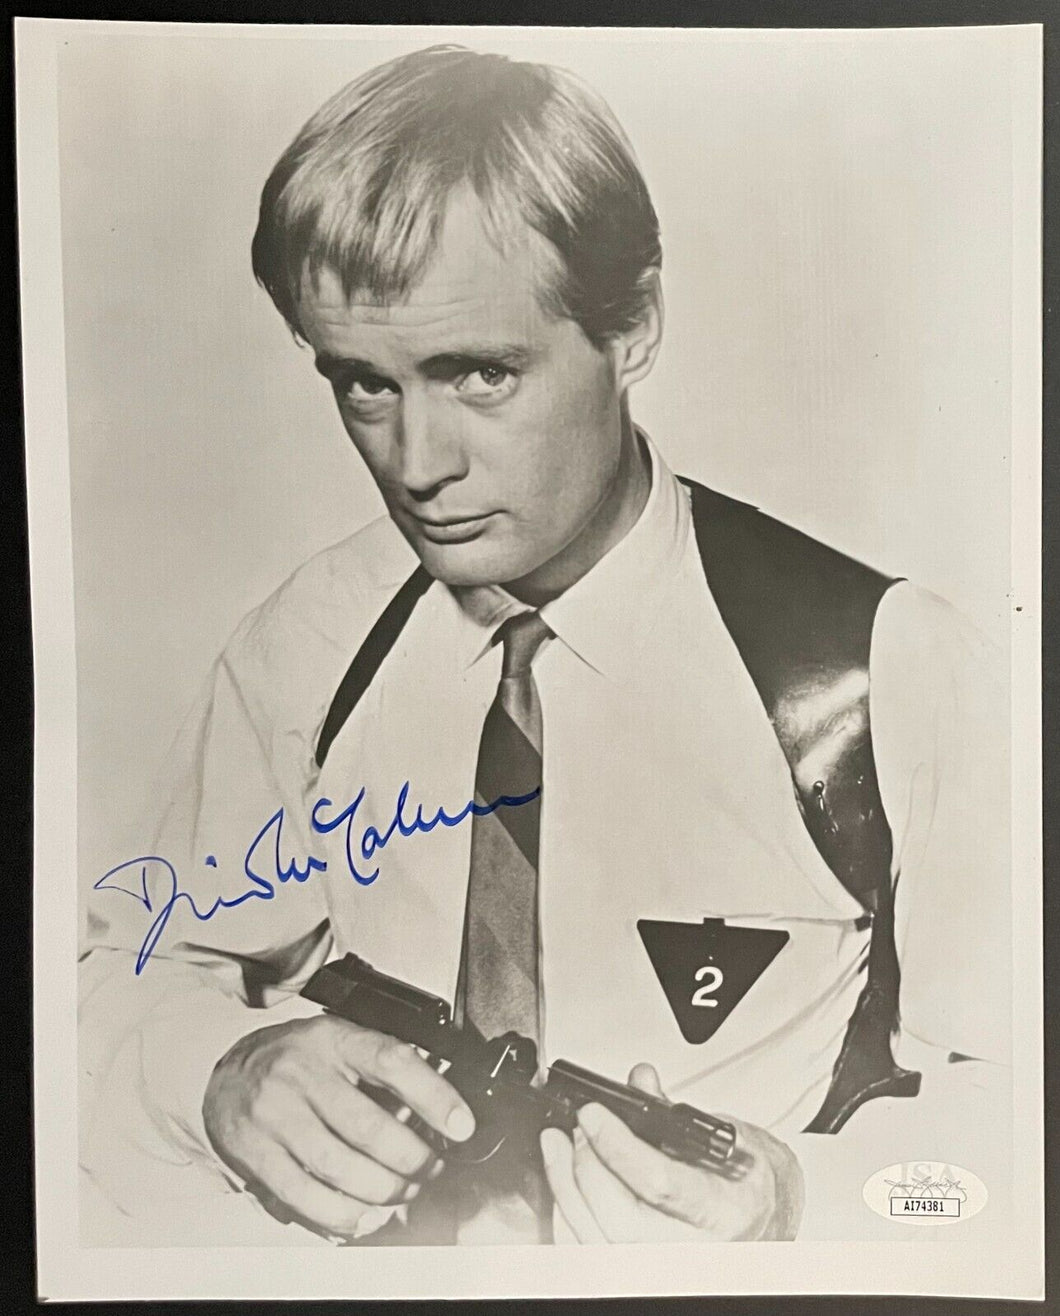 David McCallum Autographed Signed Photo JSA Celebrity The Man From U.N.C.L.E VTG